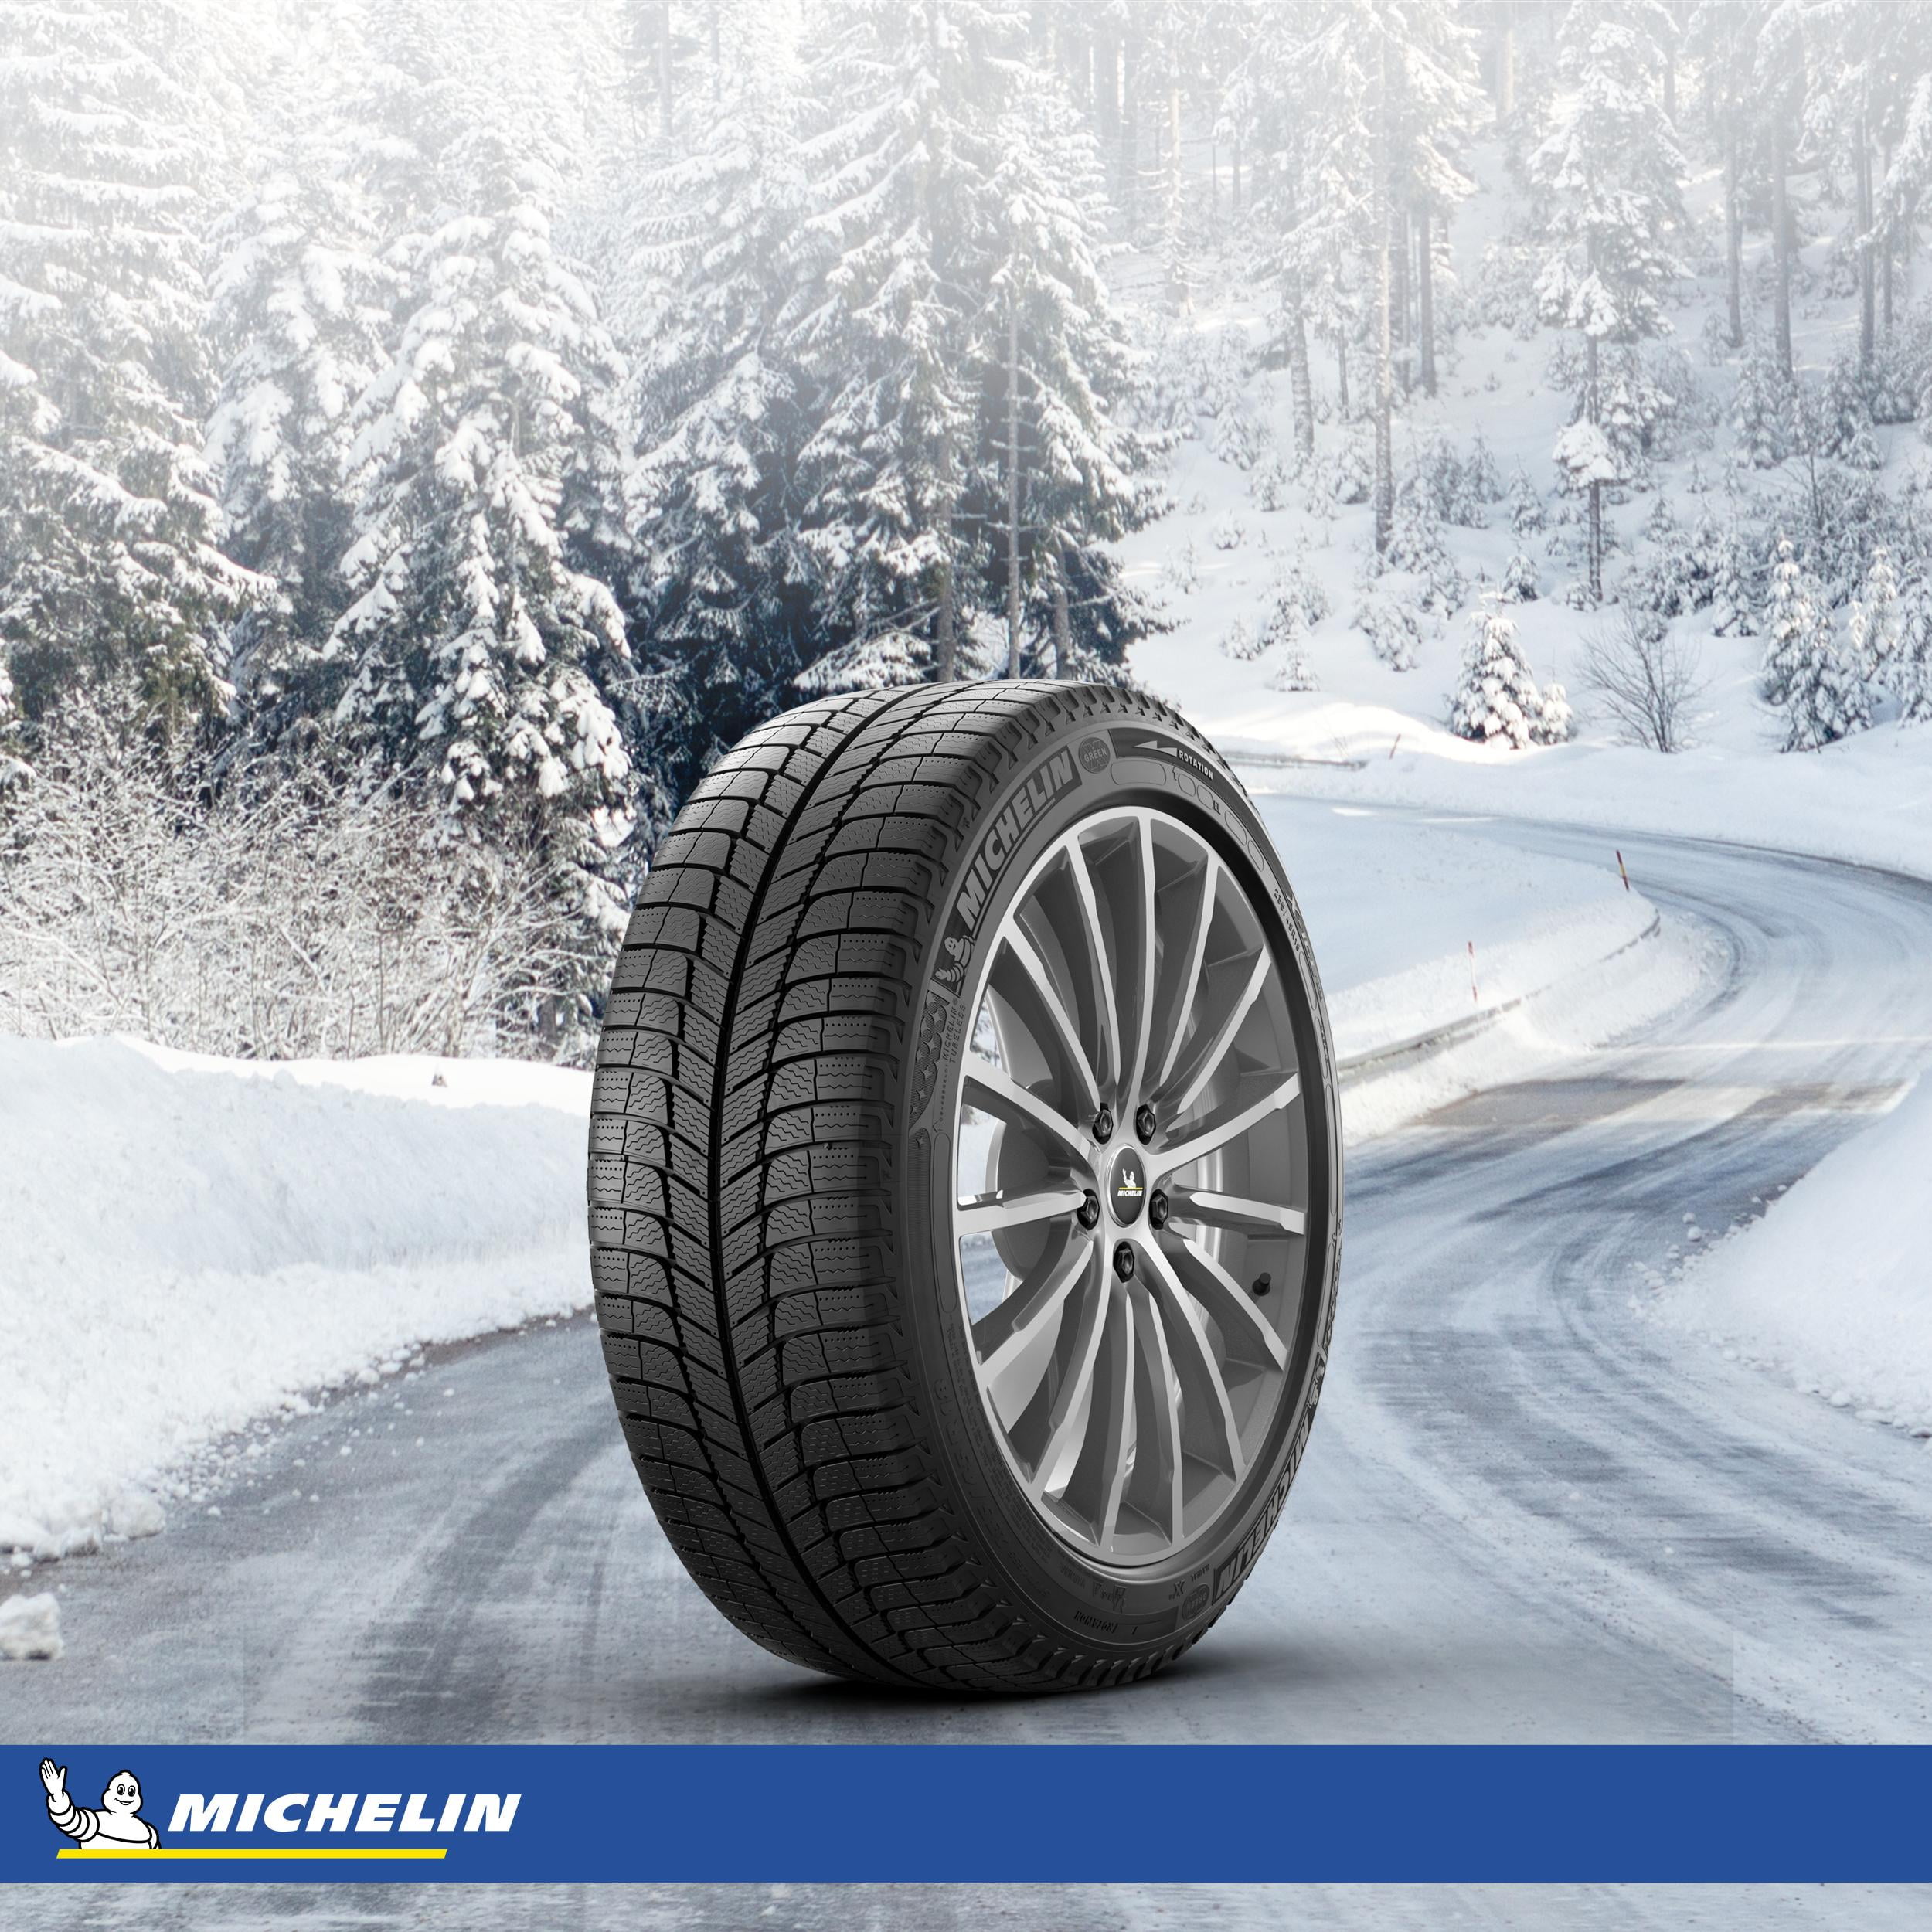 Michelin X-Ice Xi3 Winter 205/50R17 89H Passenger Tire